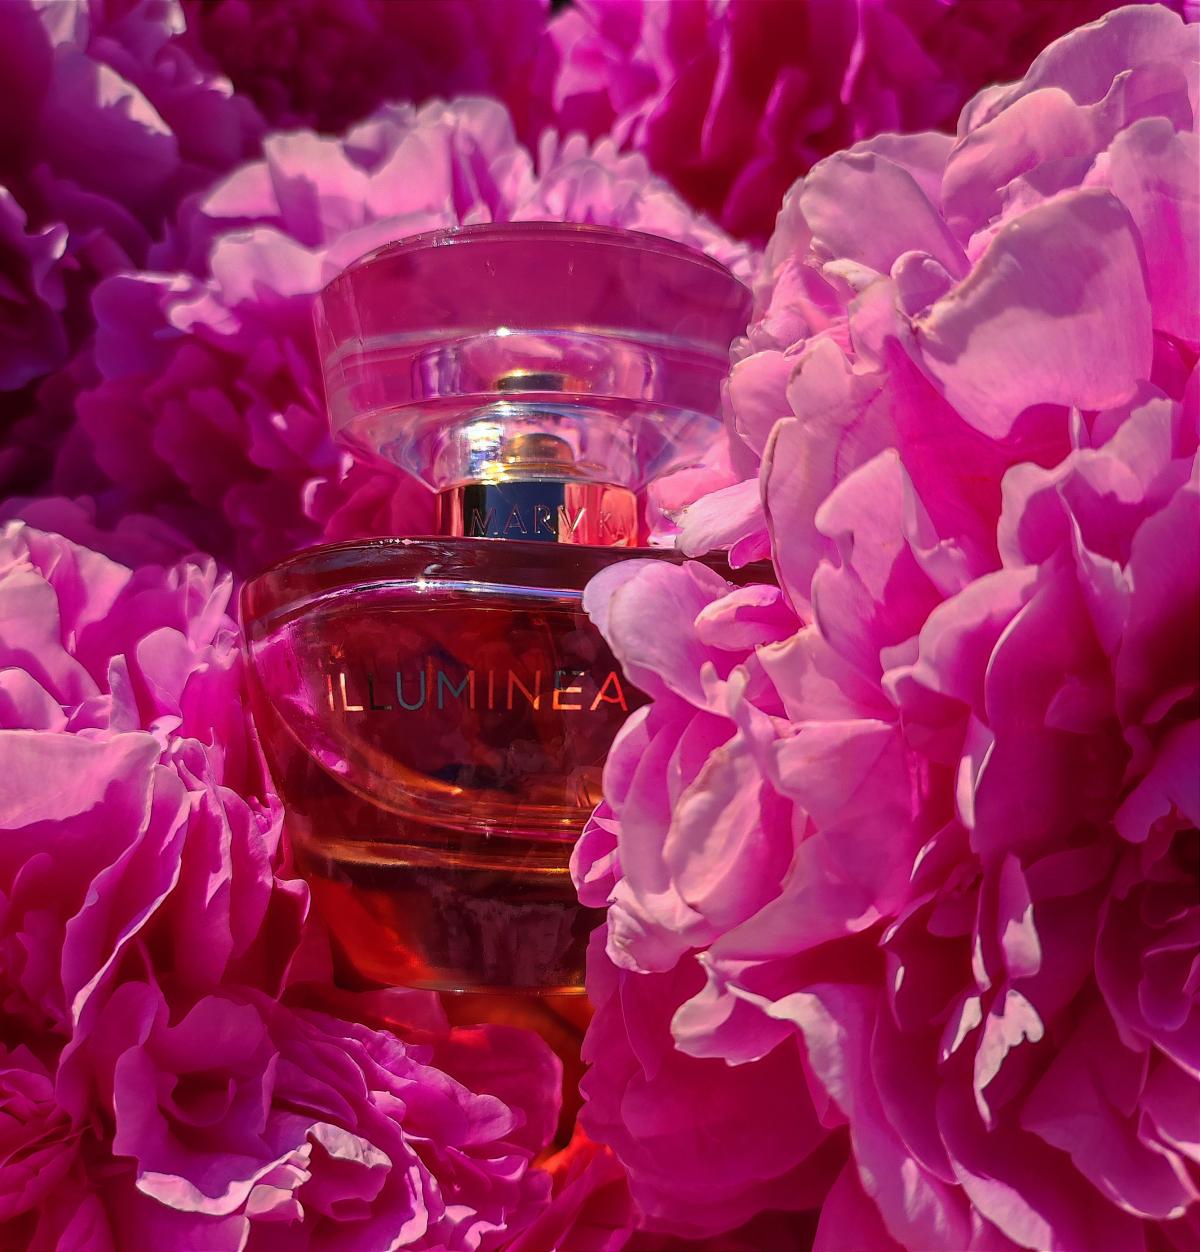 Illuminea Mary Kay perfume - a fragrance for women 2020